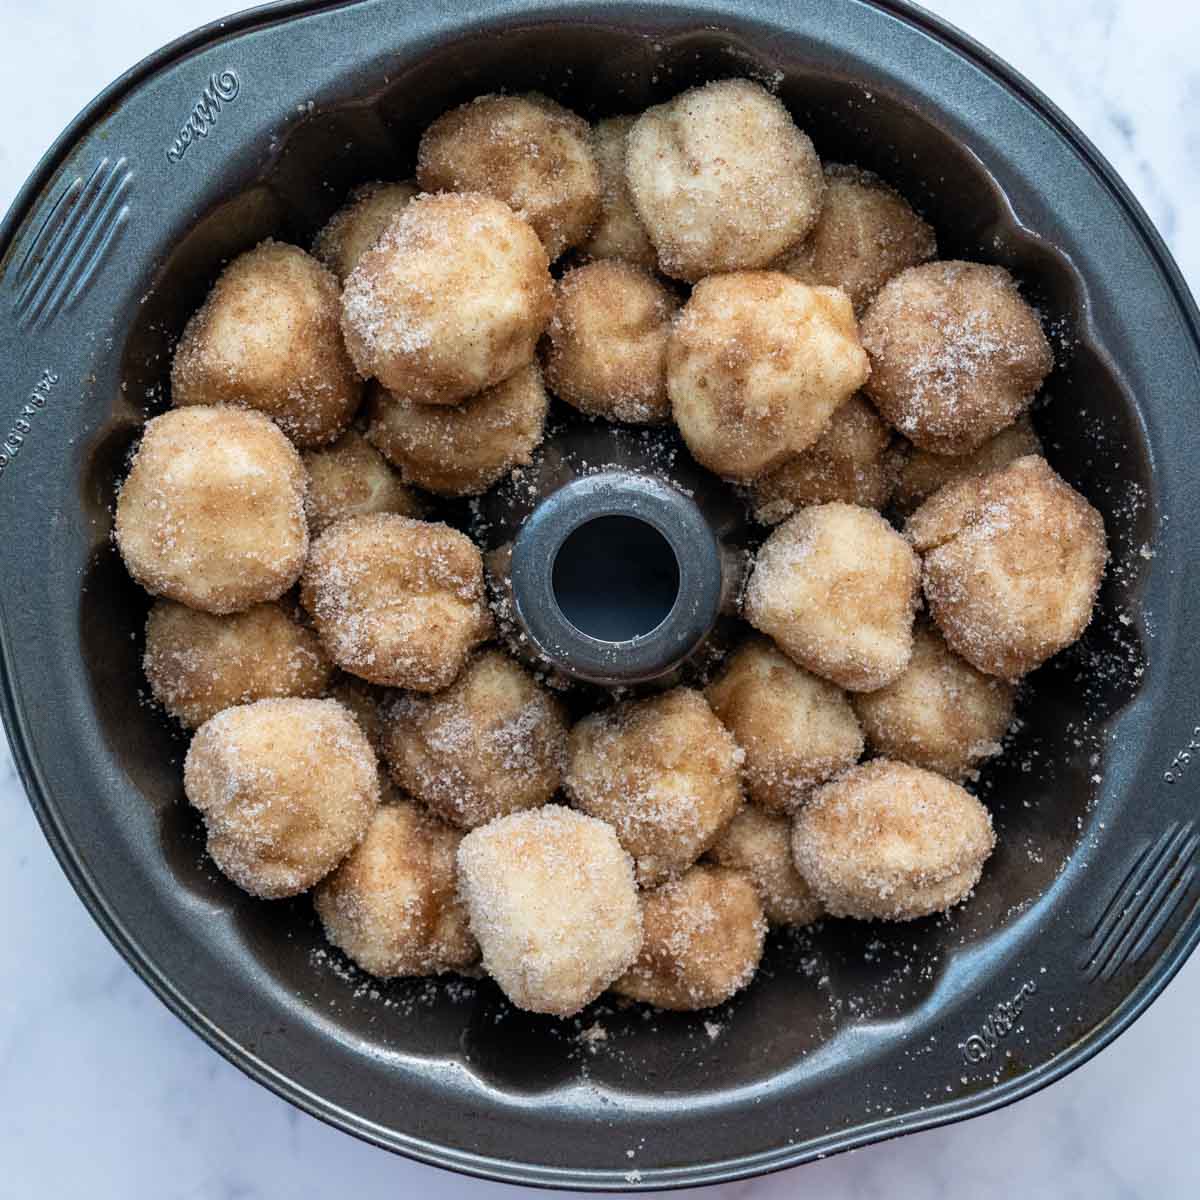 unbaked cinnamon balls in a bundt cake pan.